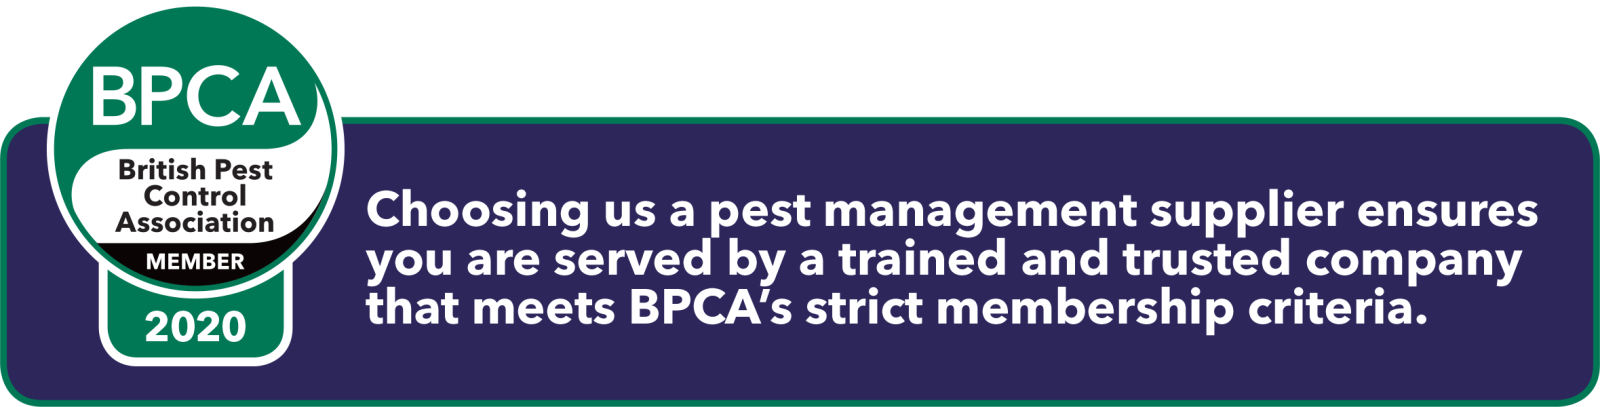 British Pest Control Association member